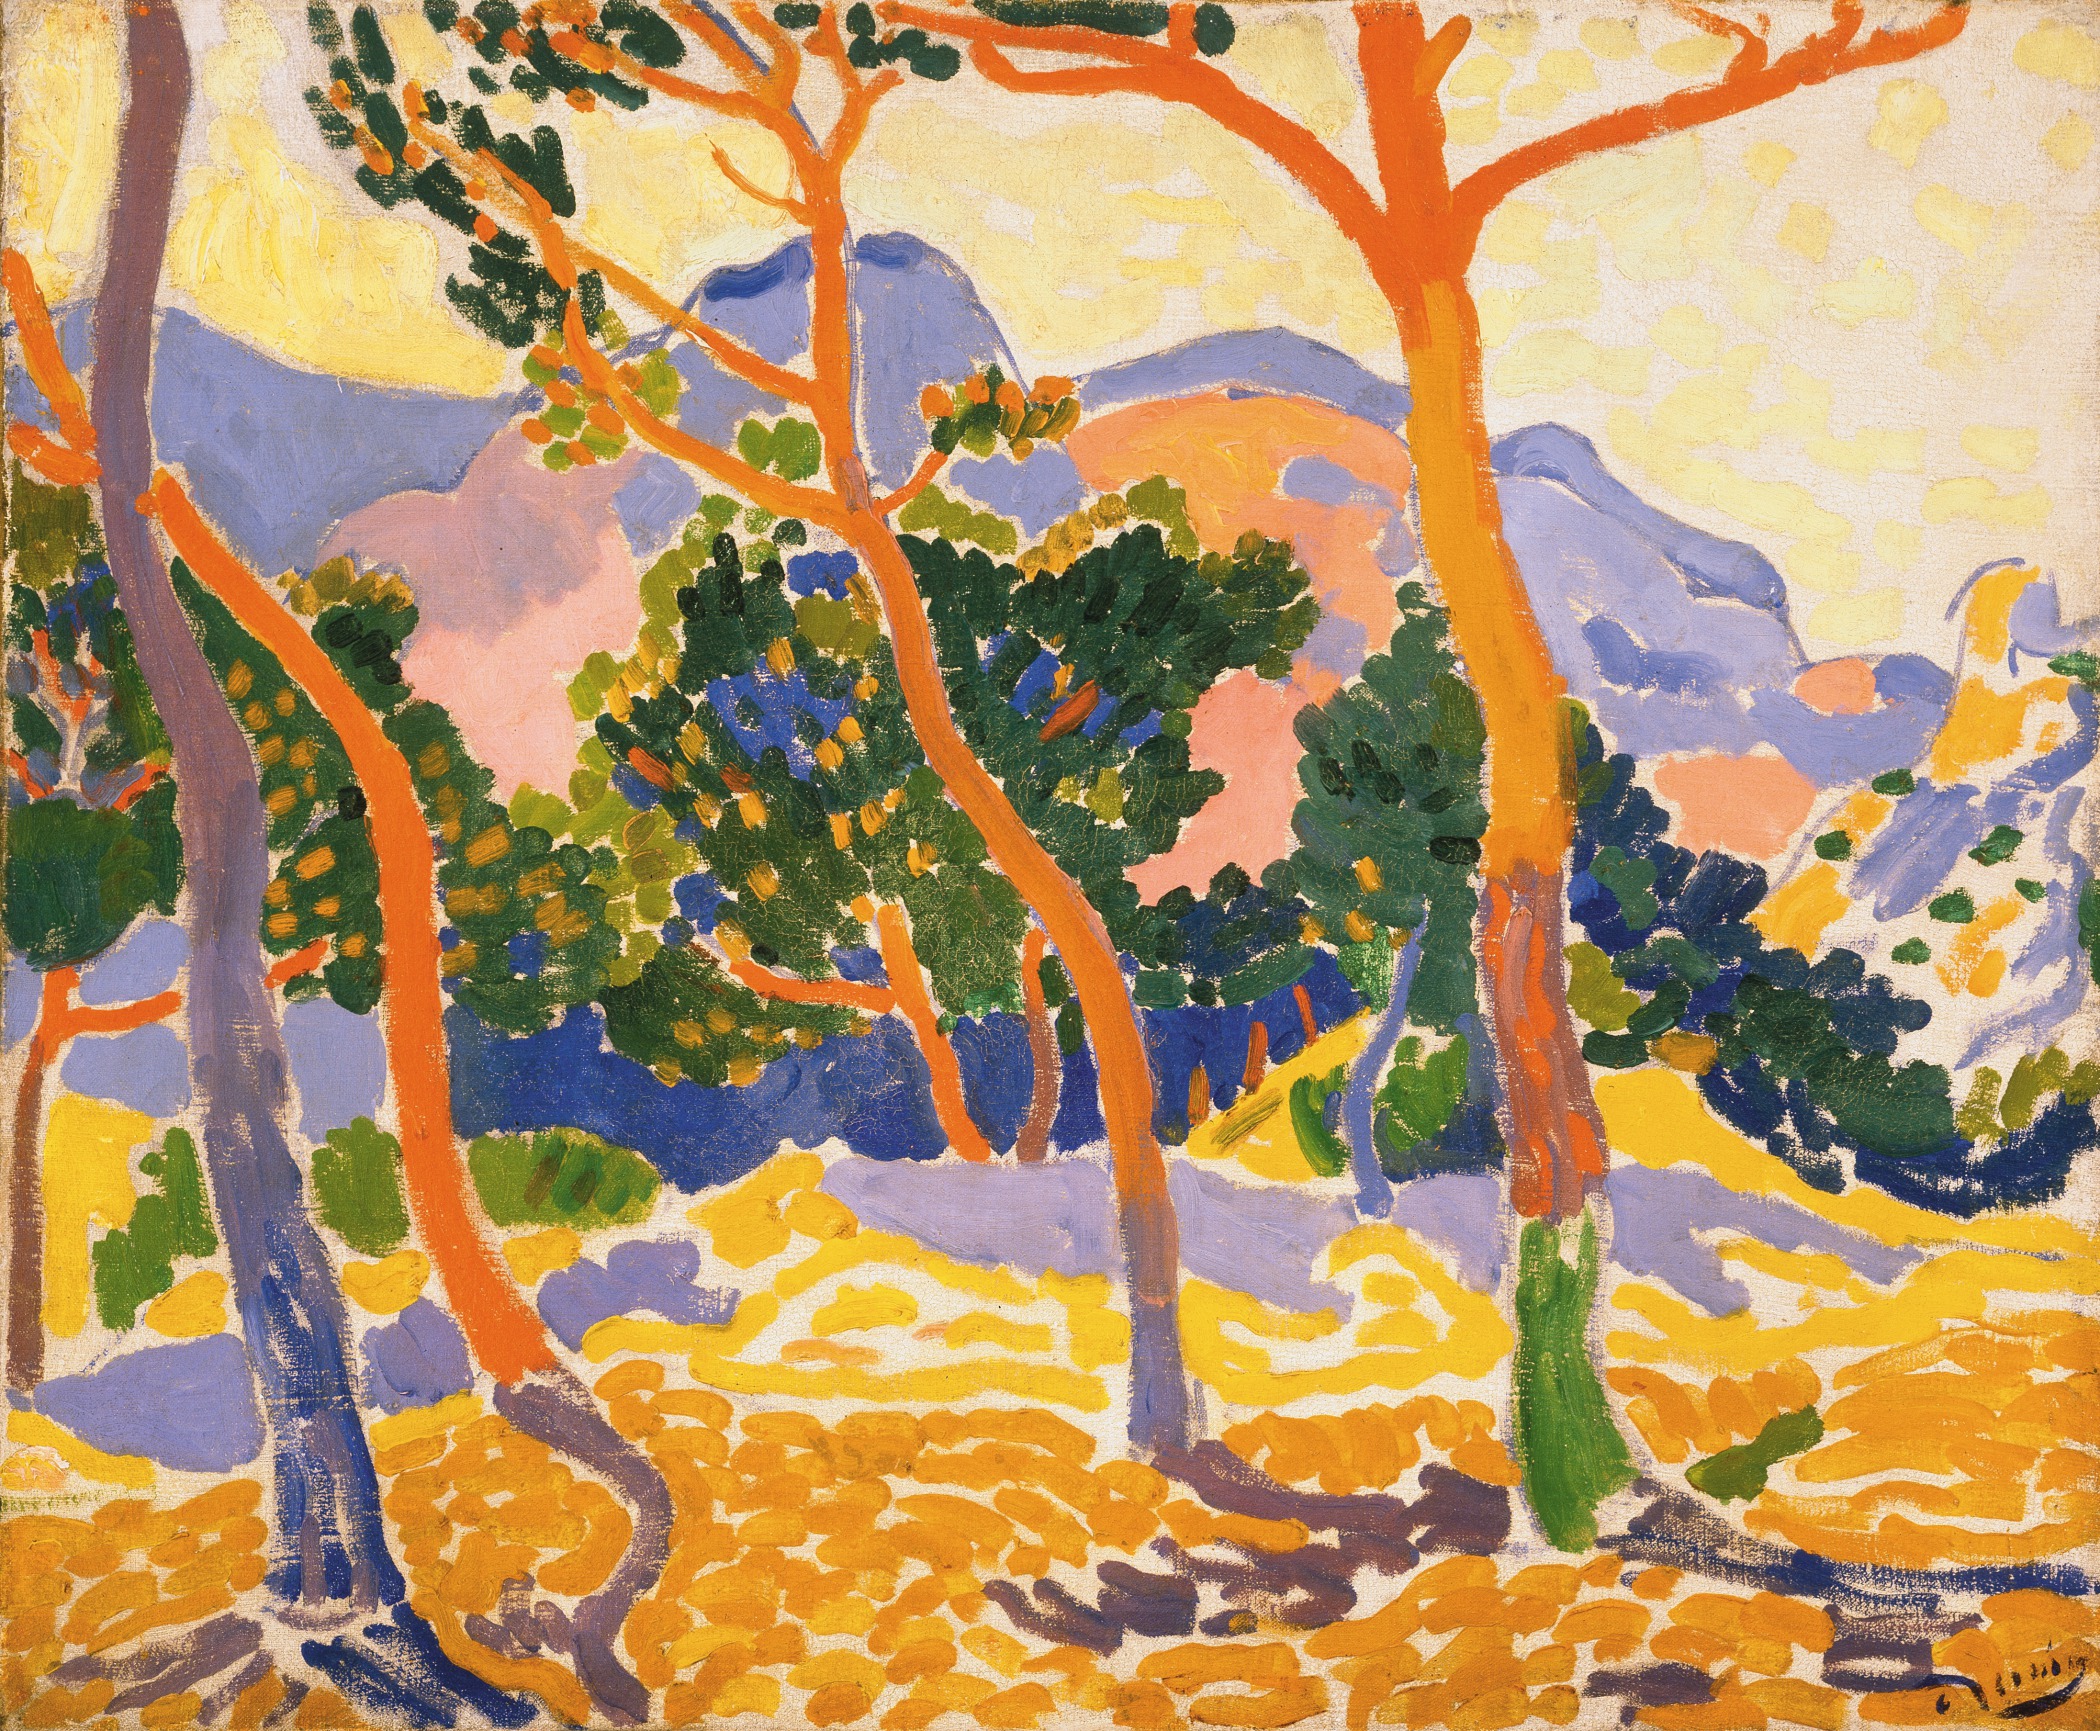 André Derain's The Trees, ca. 1906